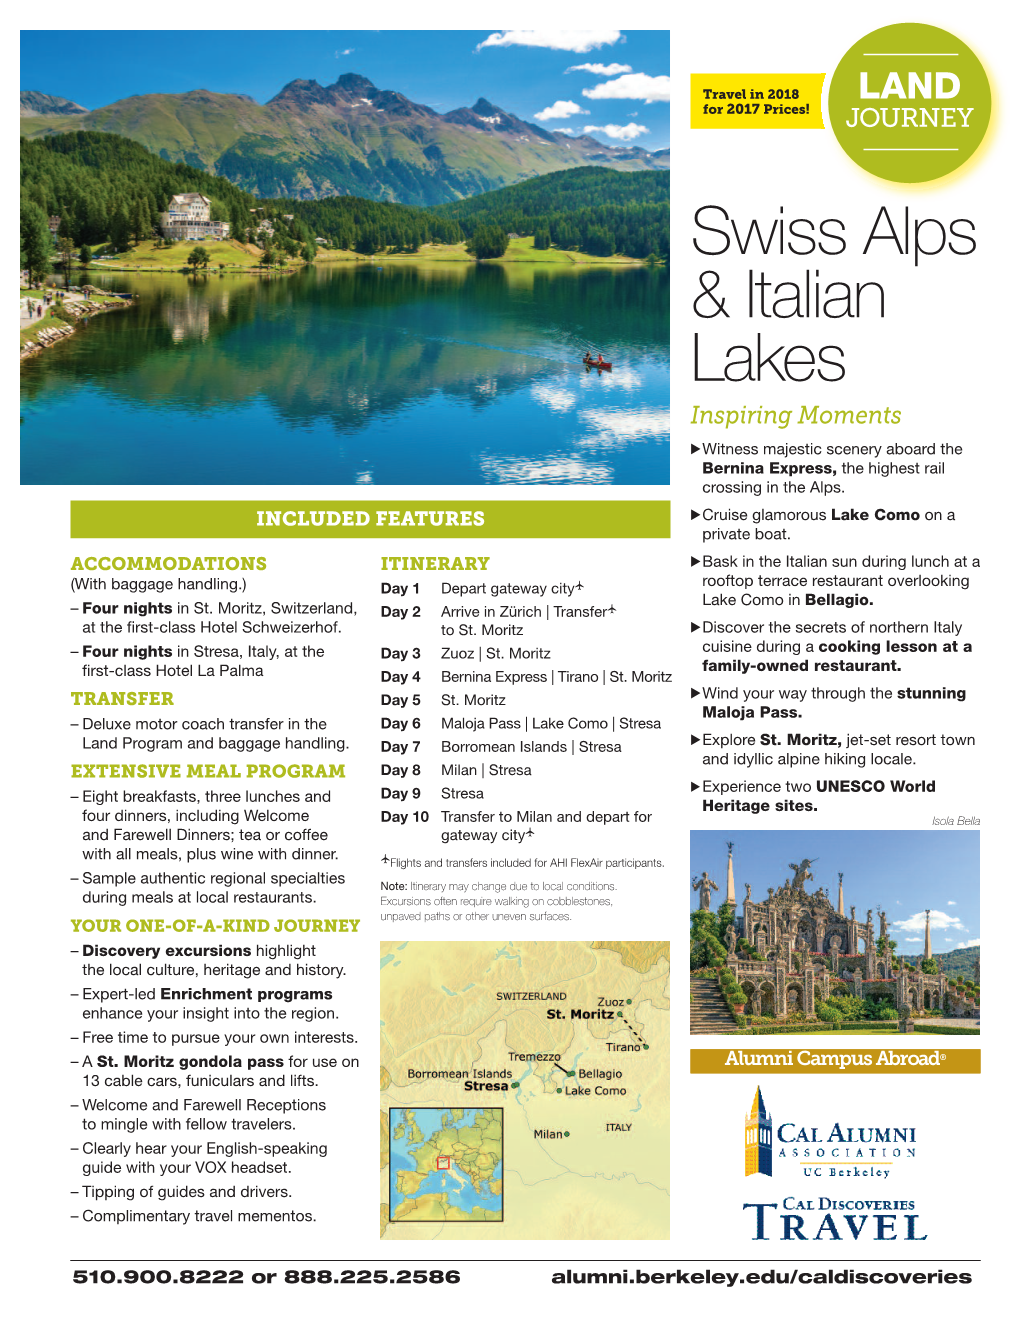 Swiss Alps & Italian Lakes